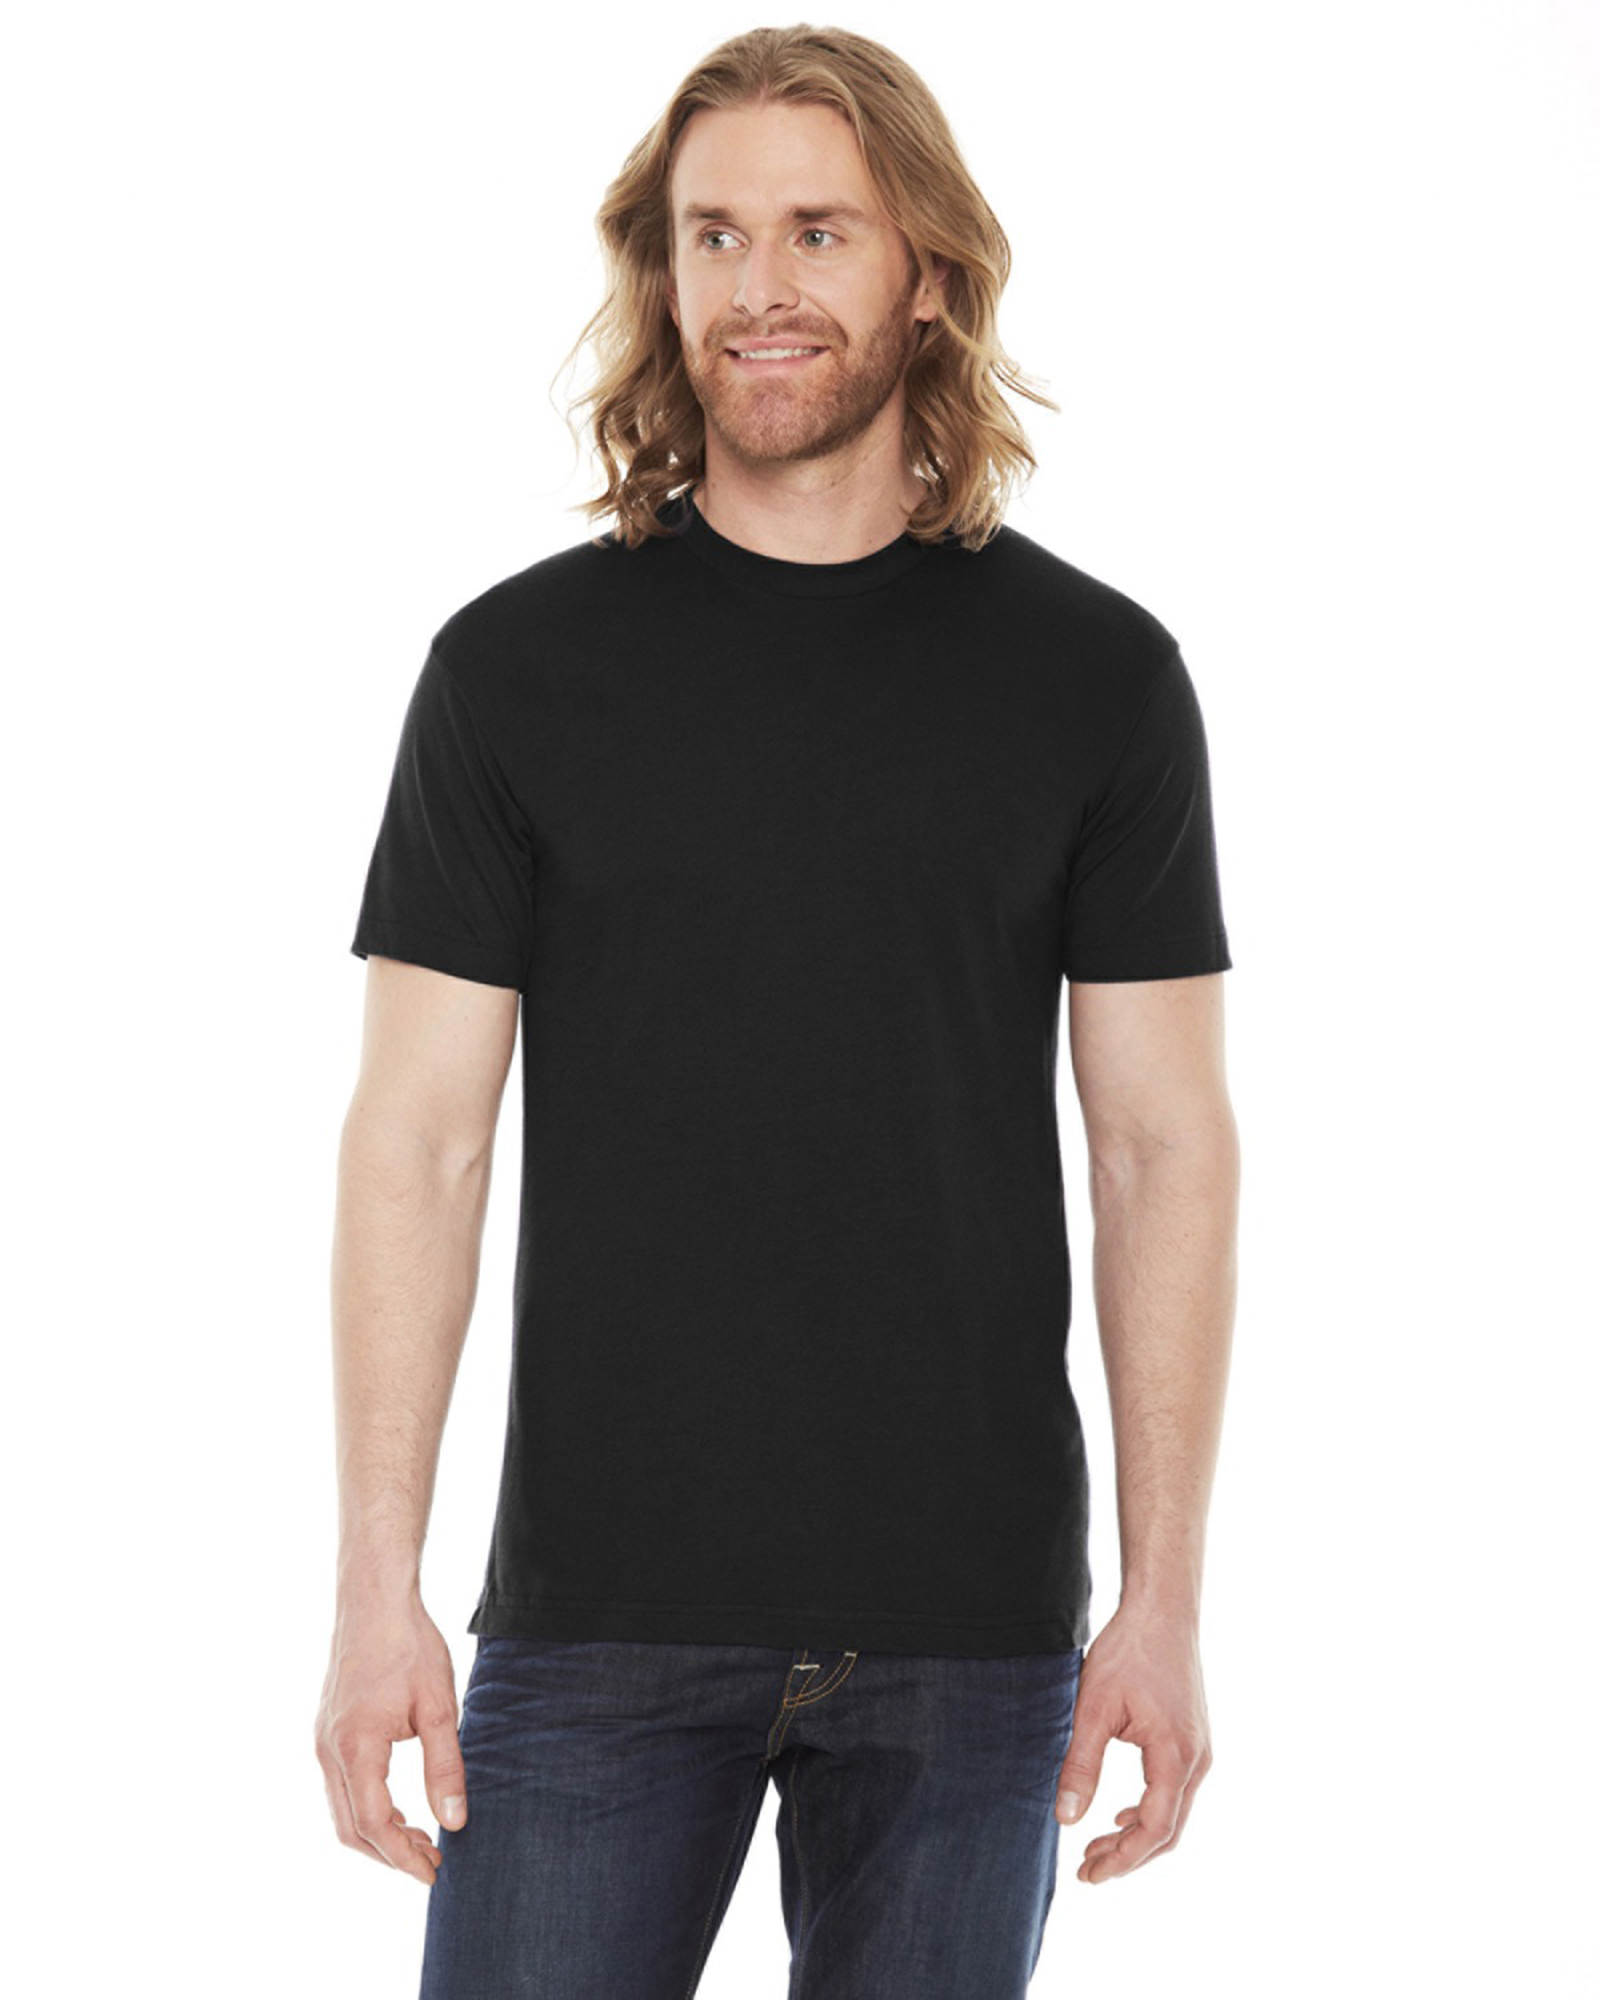 Apparel Styles - Brand X Custom T-Shirts